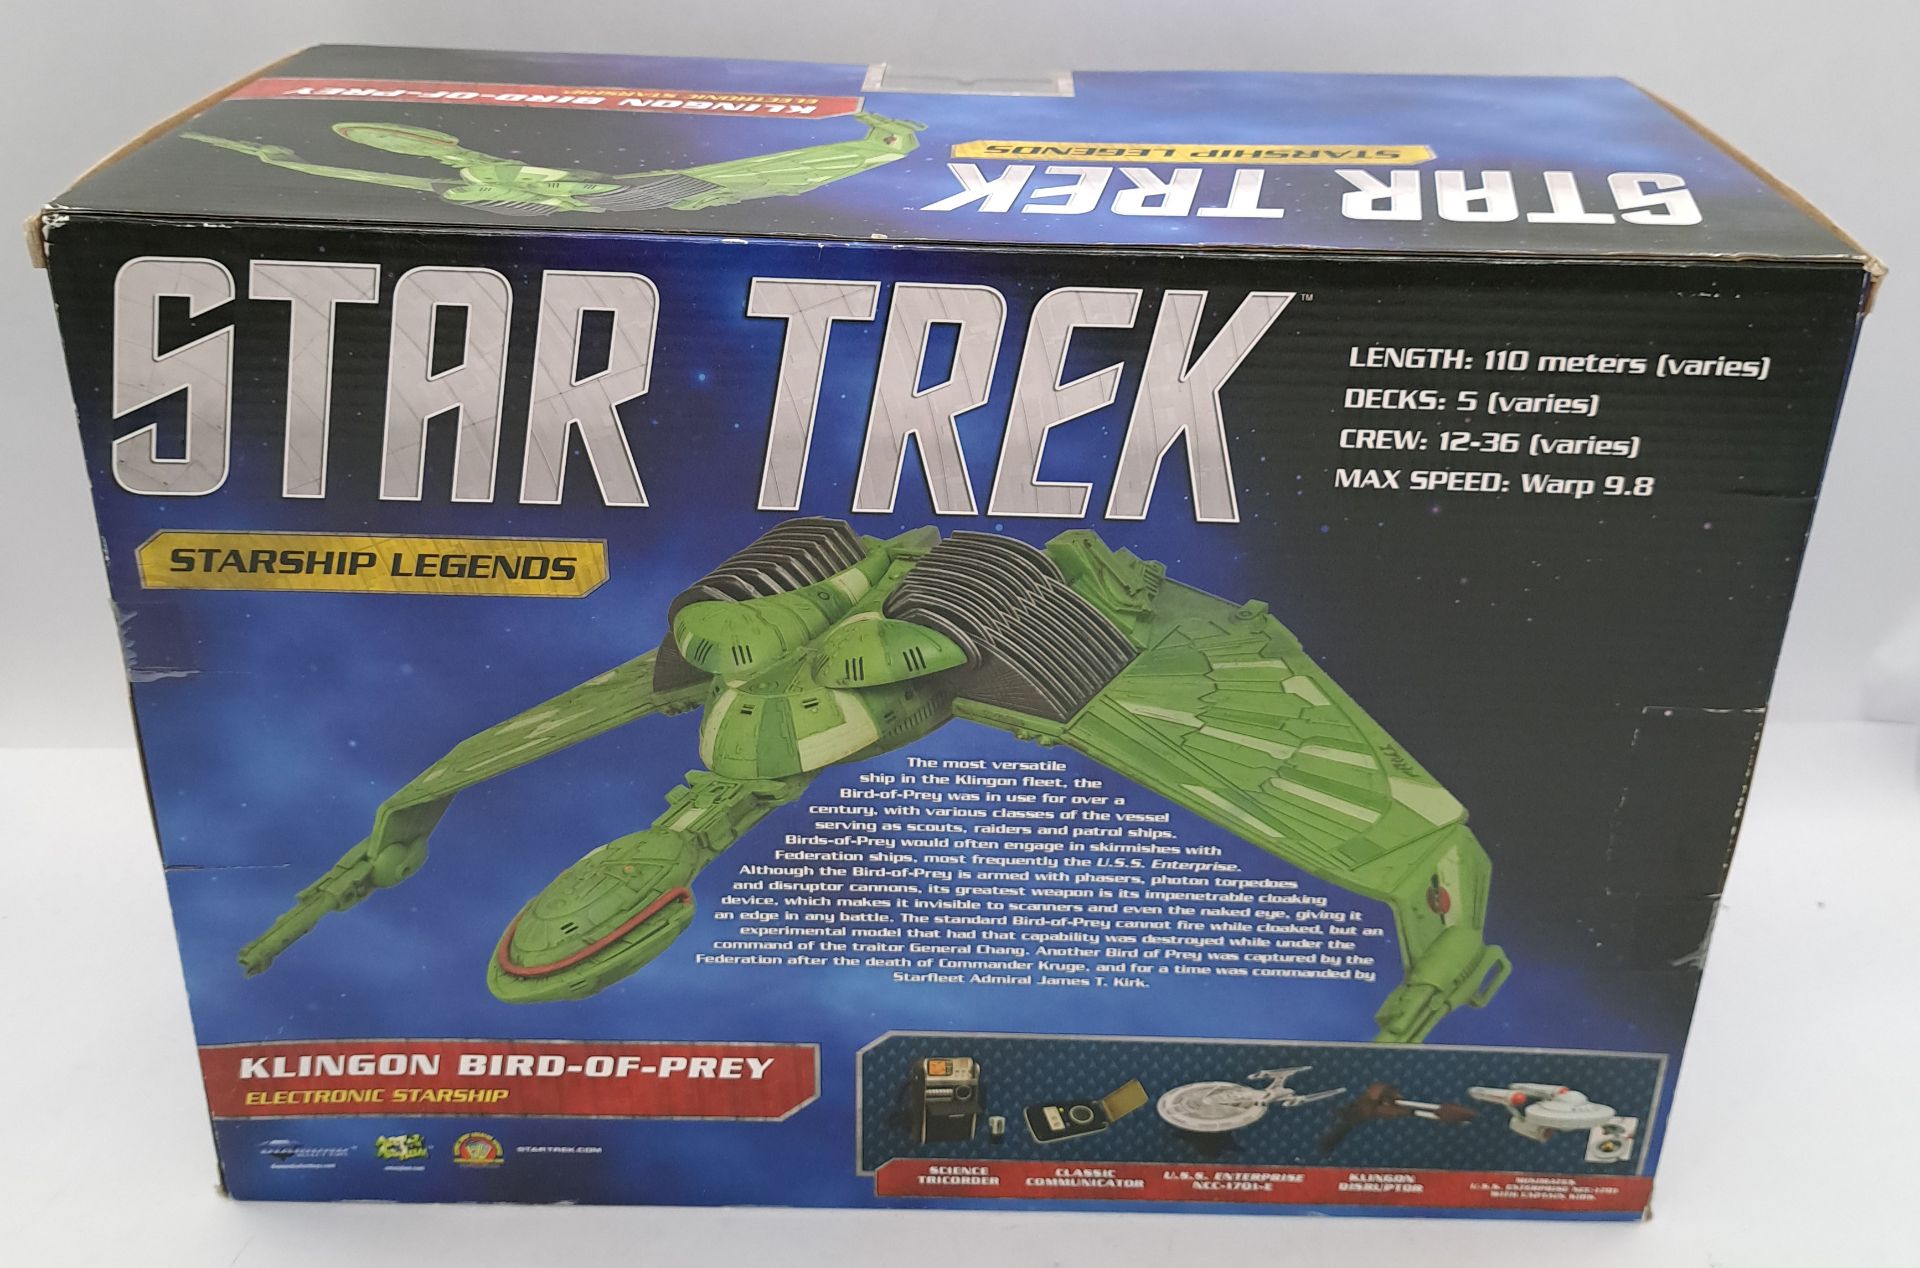 Diamond Select Toys Star Trek Starship Legends Klingon Bird-Of-Prey. - Image 2 of 2